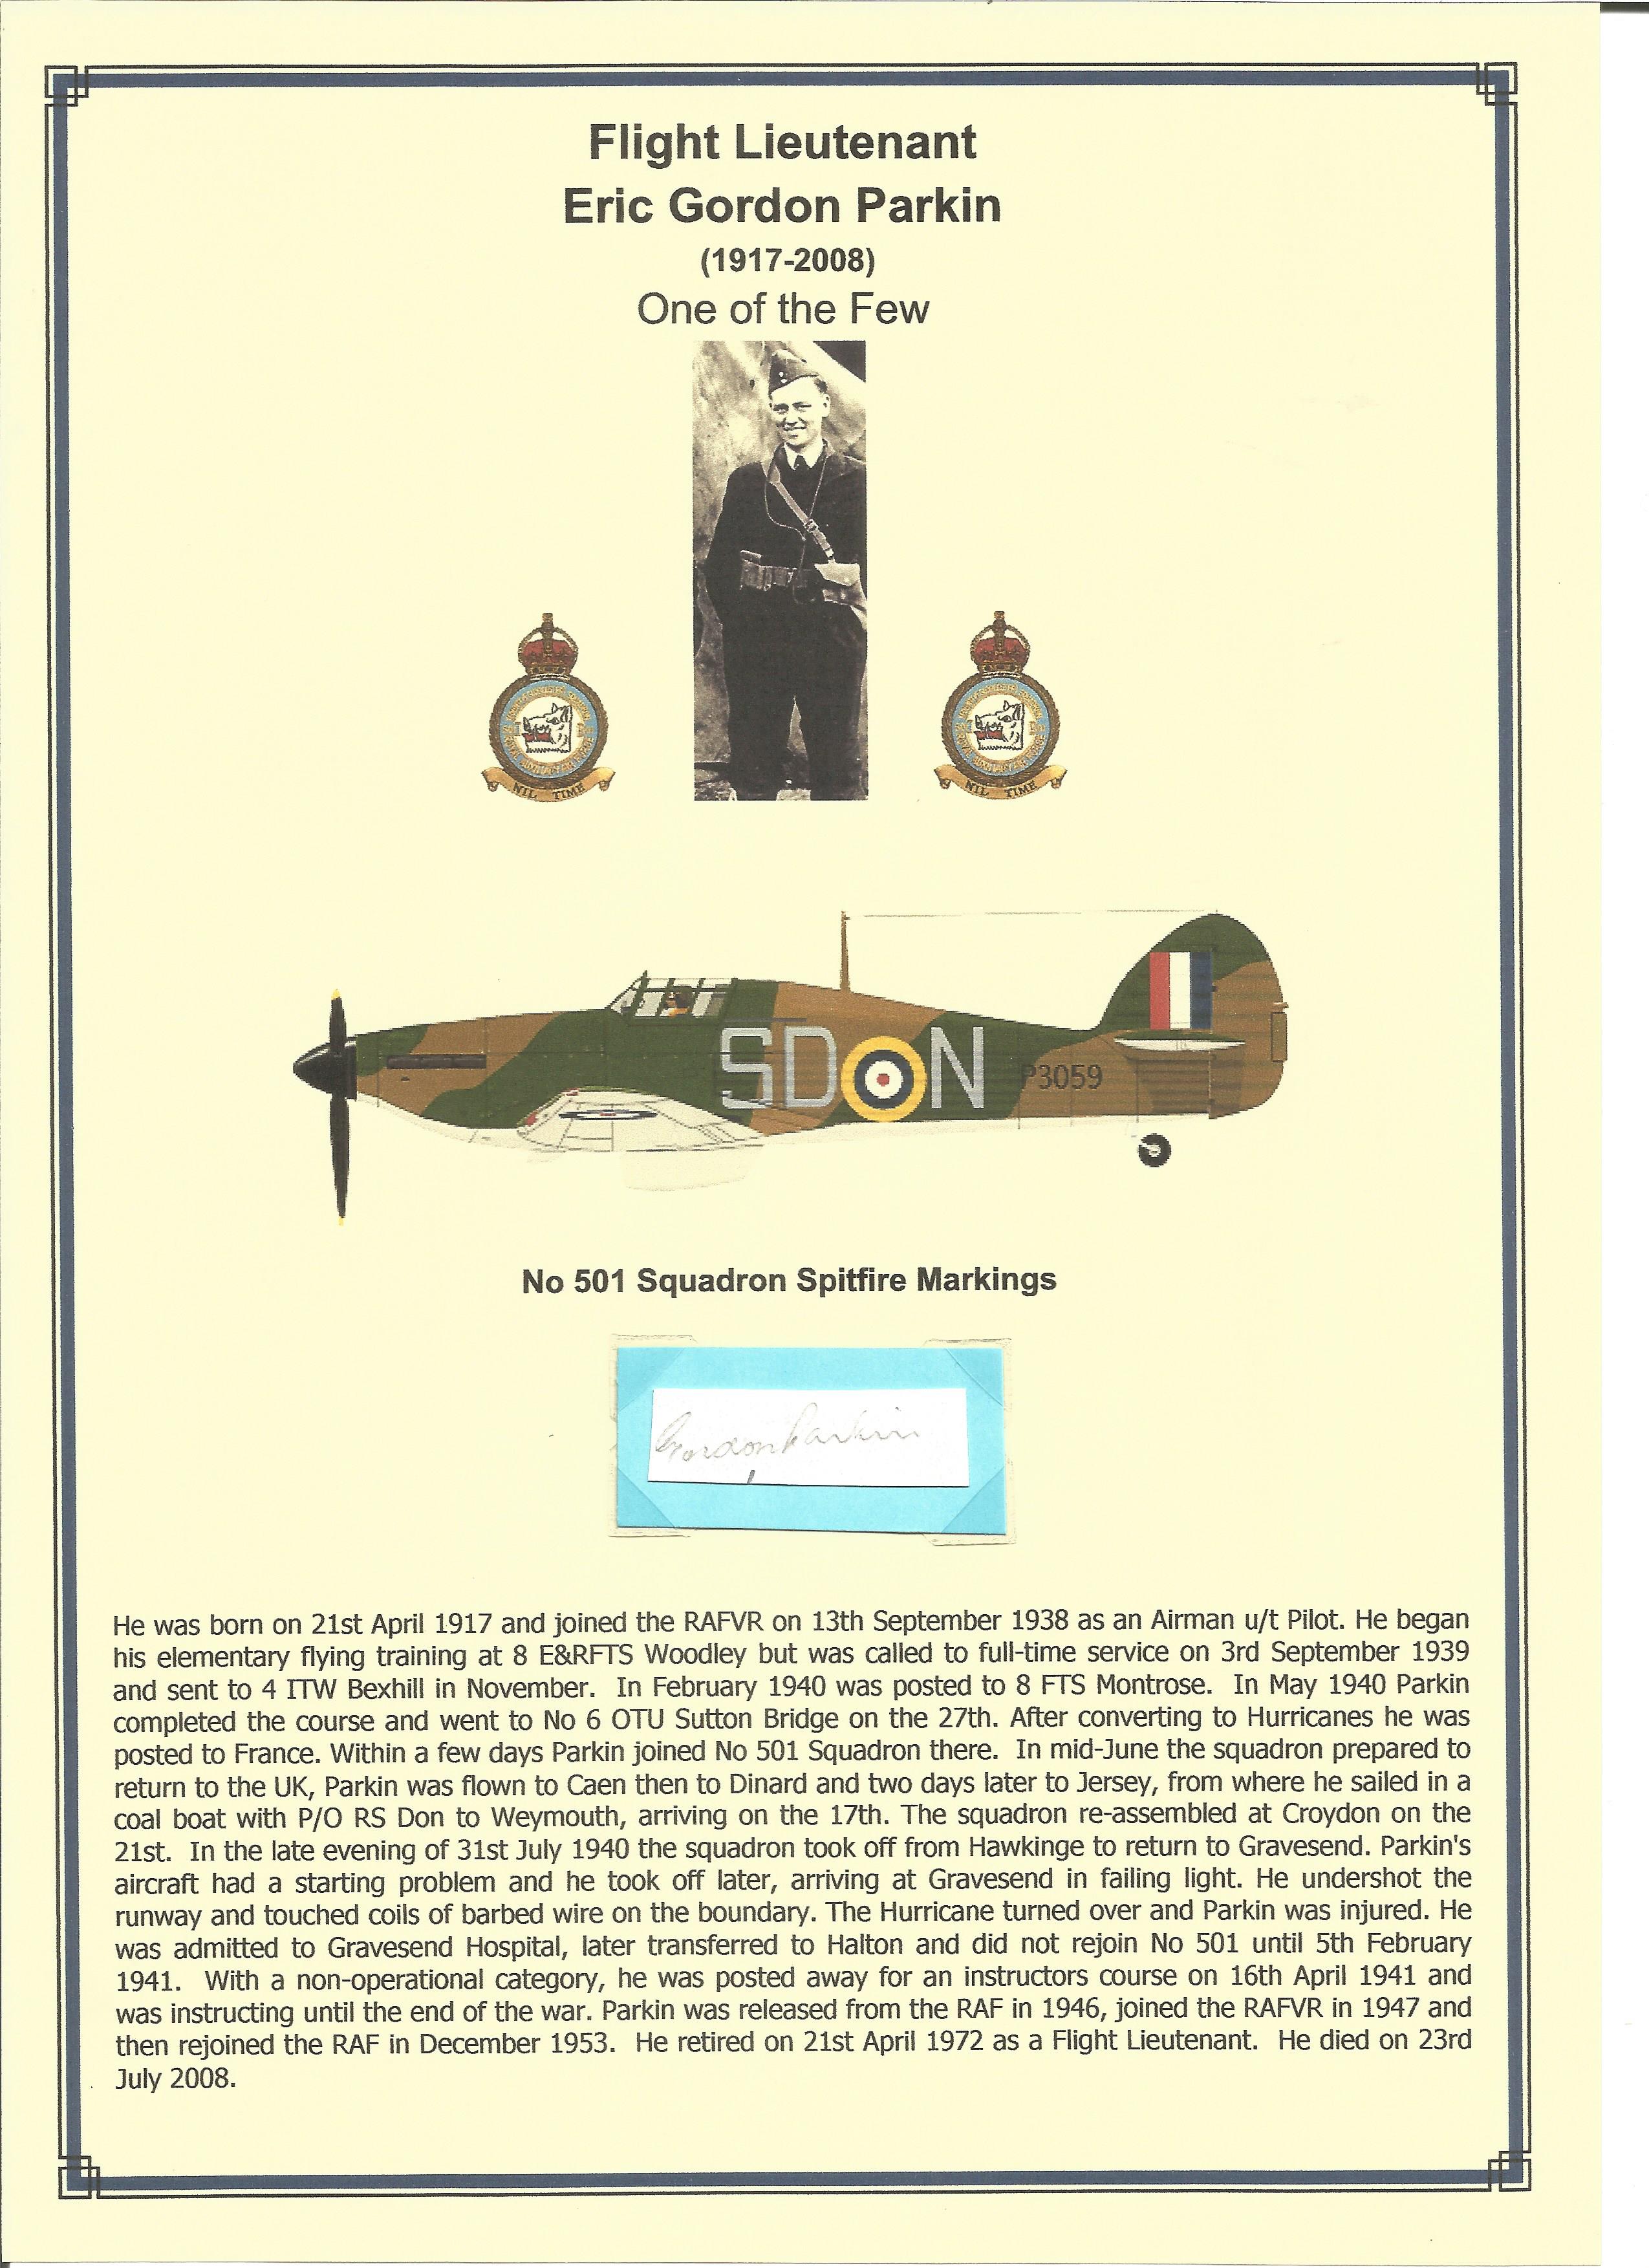 Flight Lieutenant Eric Gordon Parkin signature piece. WW2 RAF Battle of Britain pilot. Set into